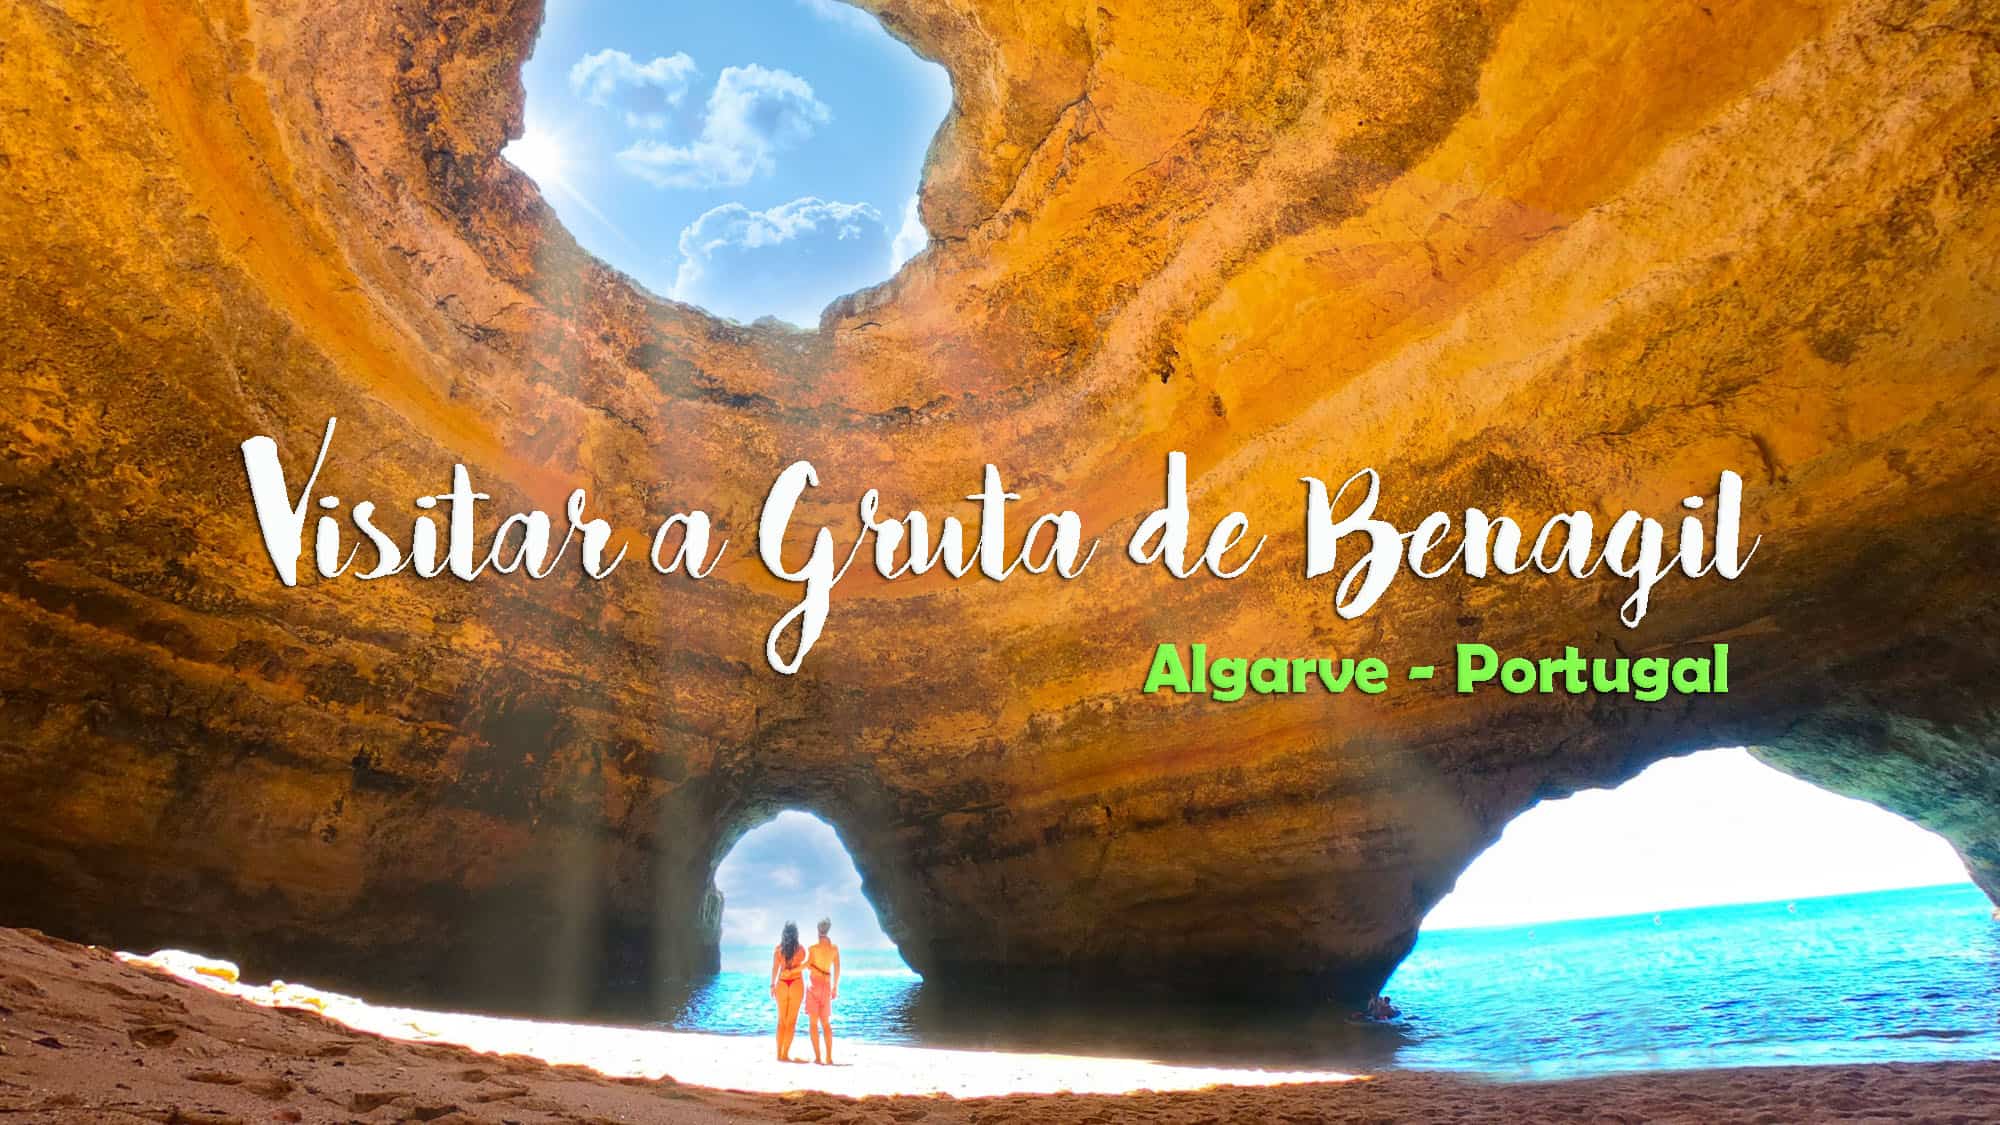 Visitar a GRUTA DE BENAGIl | Tudo o que precisa saber para chegar ao algar de Benagil, no Algarve